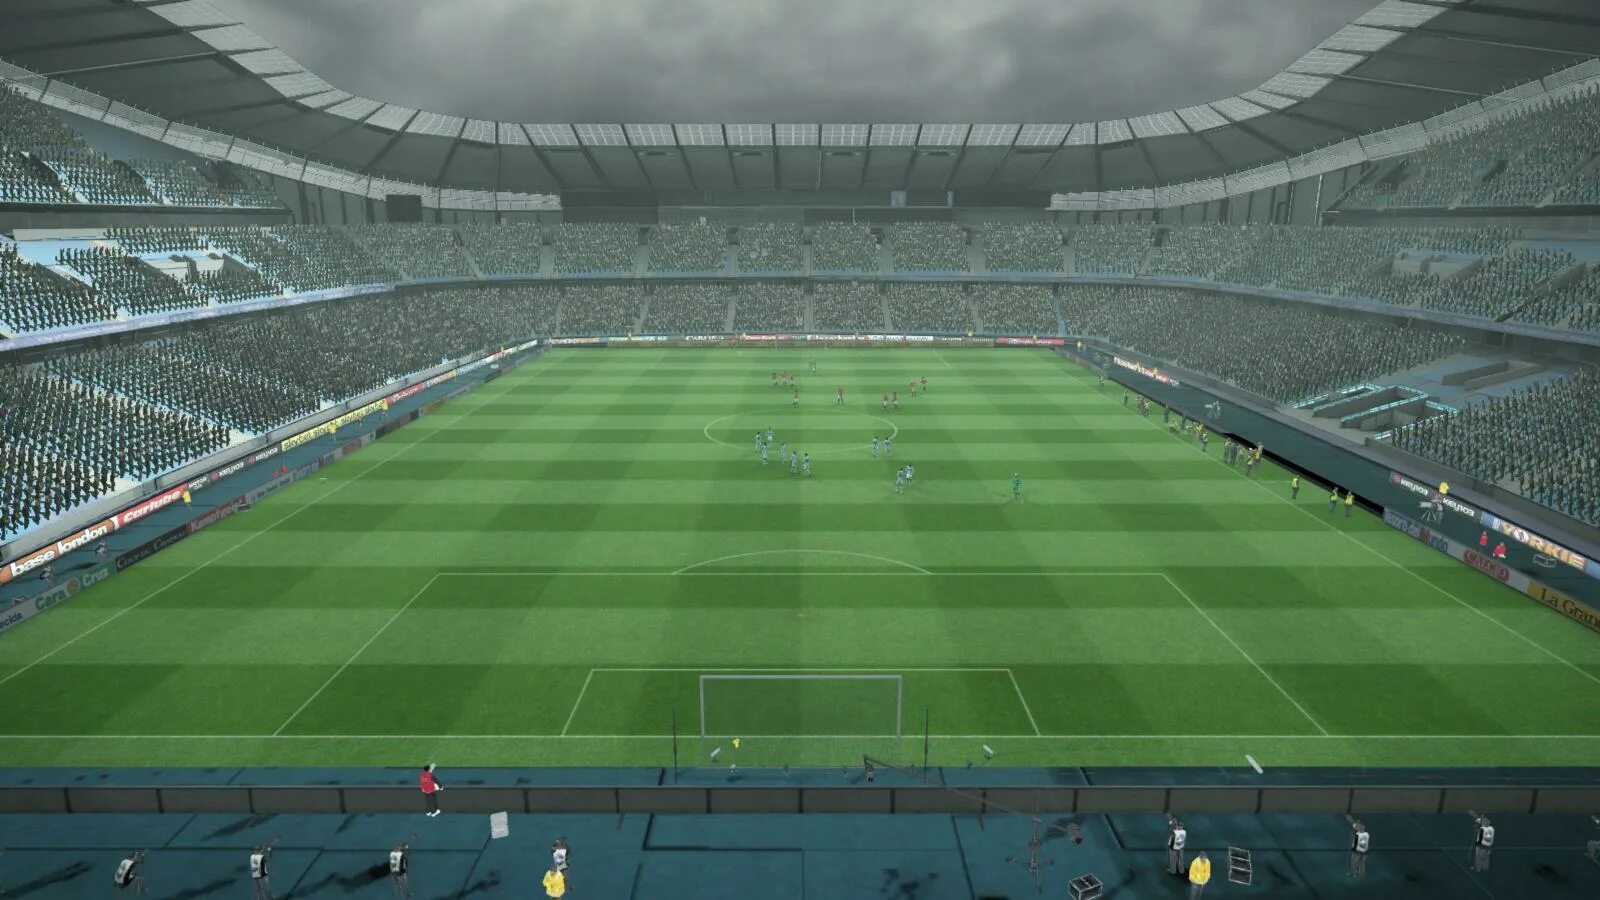 Программа стадион. PES 2013 снежный стадион. 3 D бунёдкор стадион. СОККЕР Сити стадион внутри. FIFA Stadium.